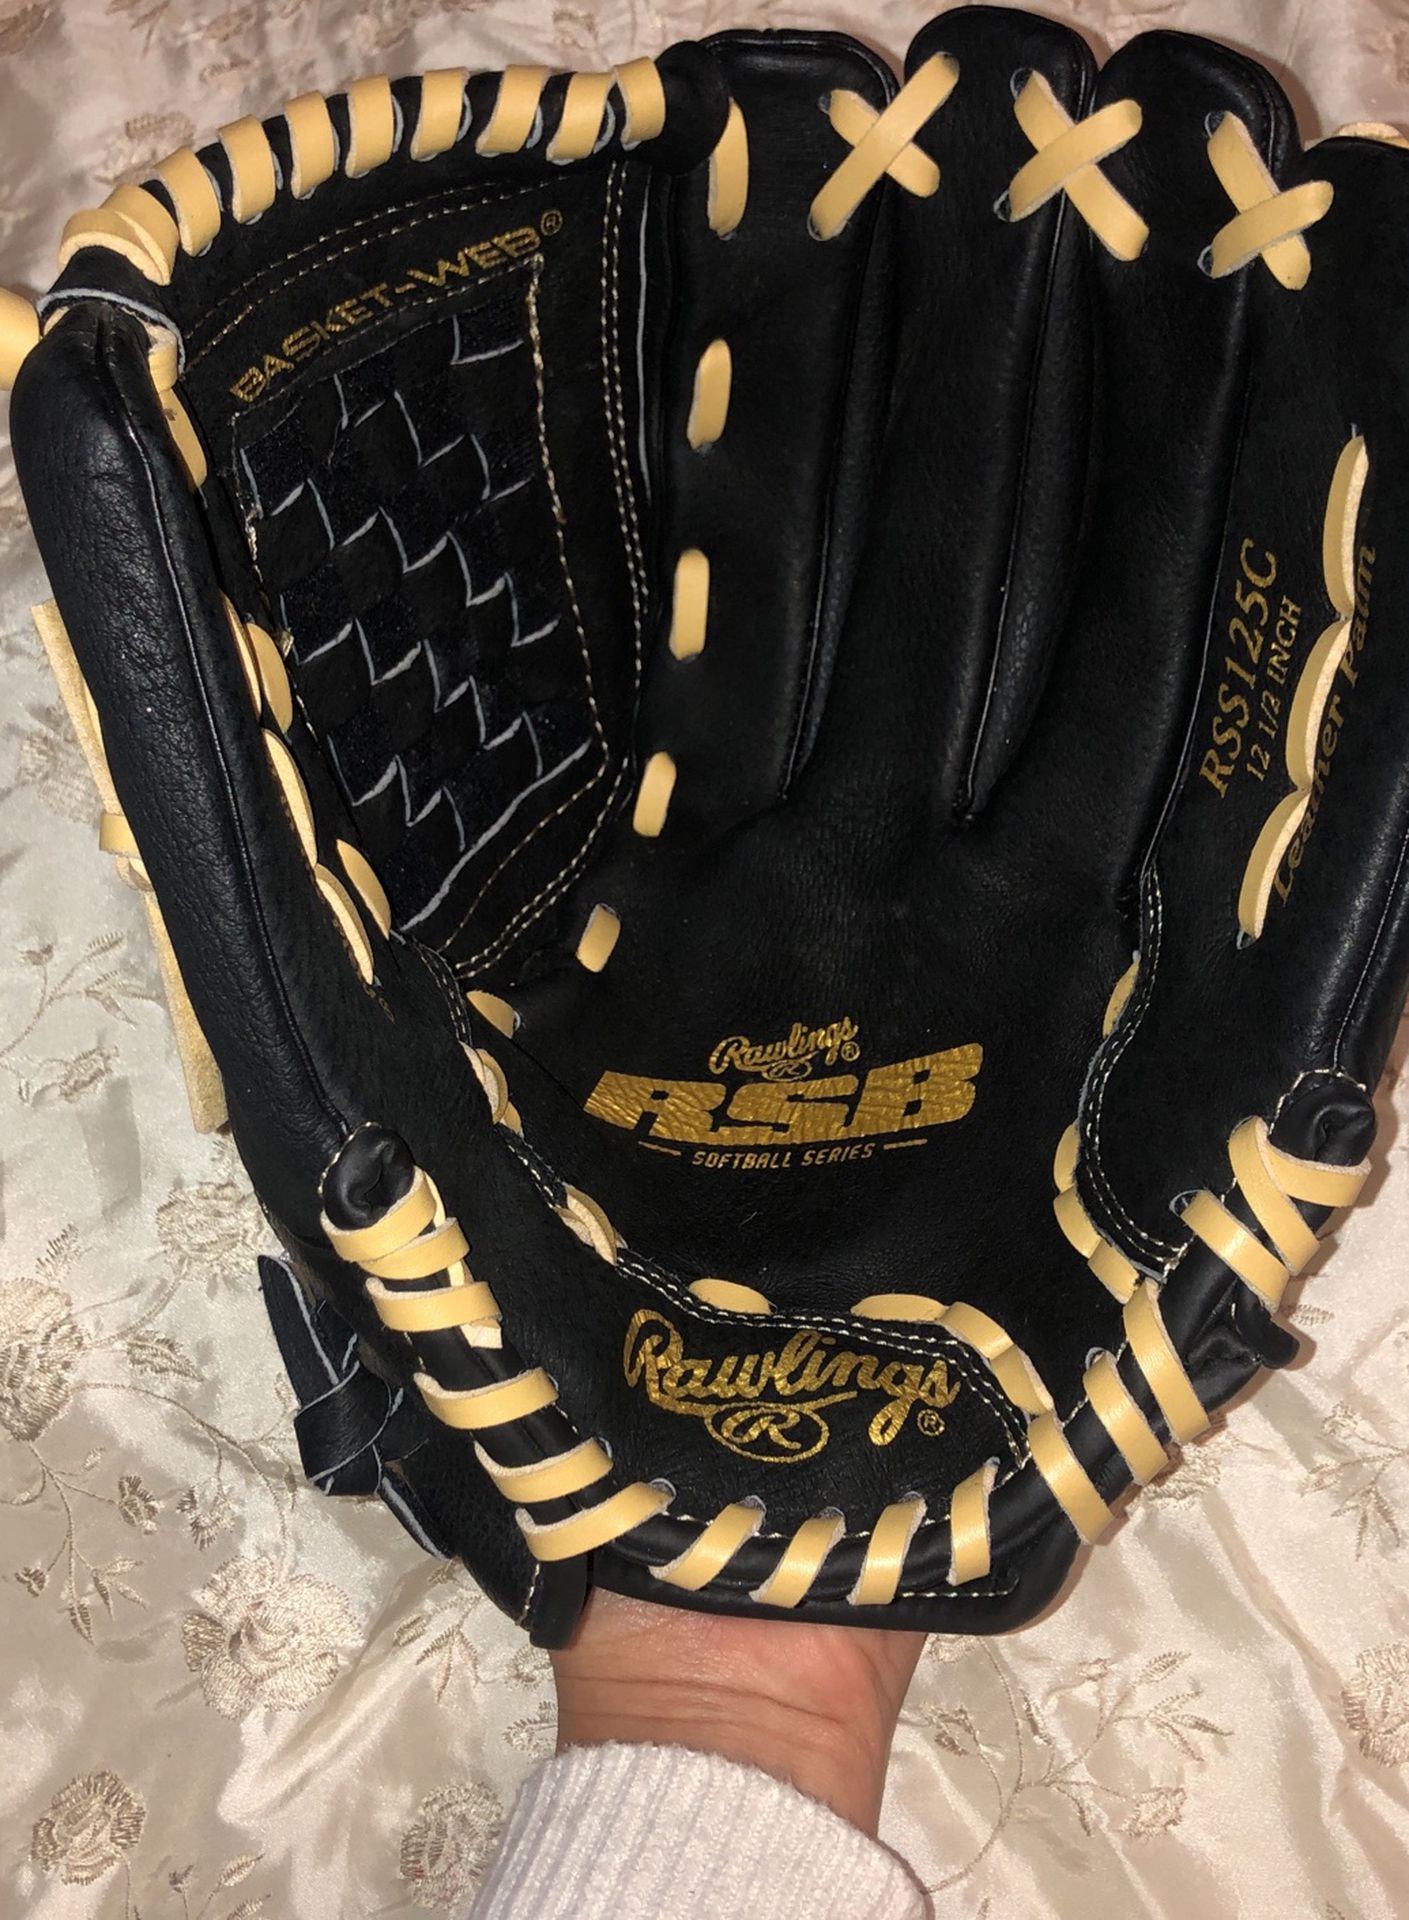 Softball Rawling Glove, 12 1/2 Inch, Leather Palm